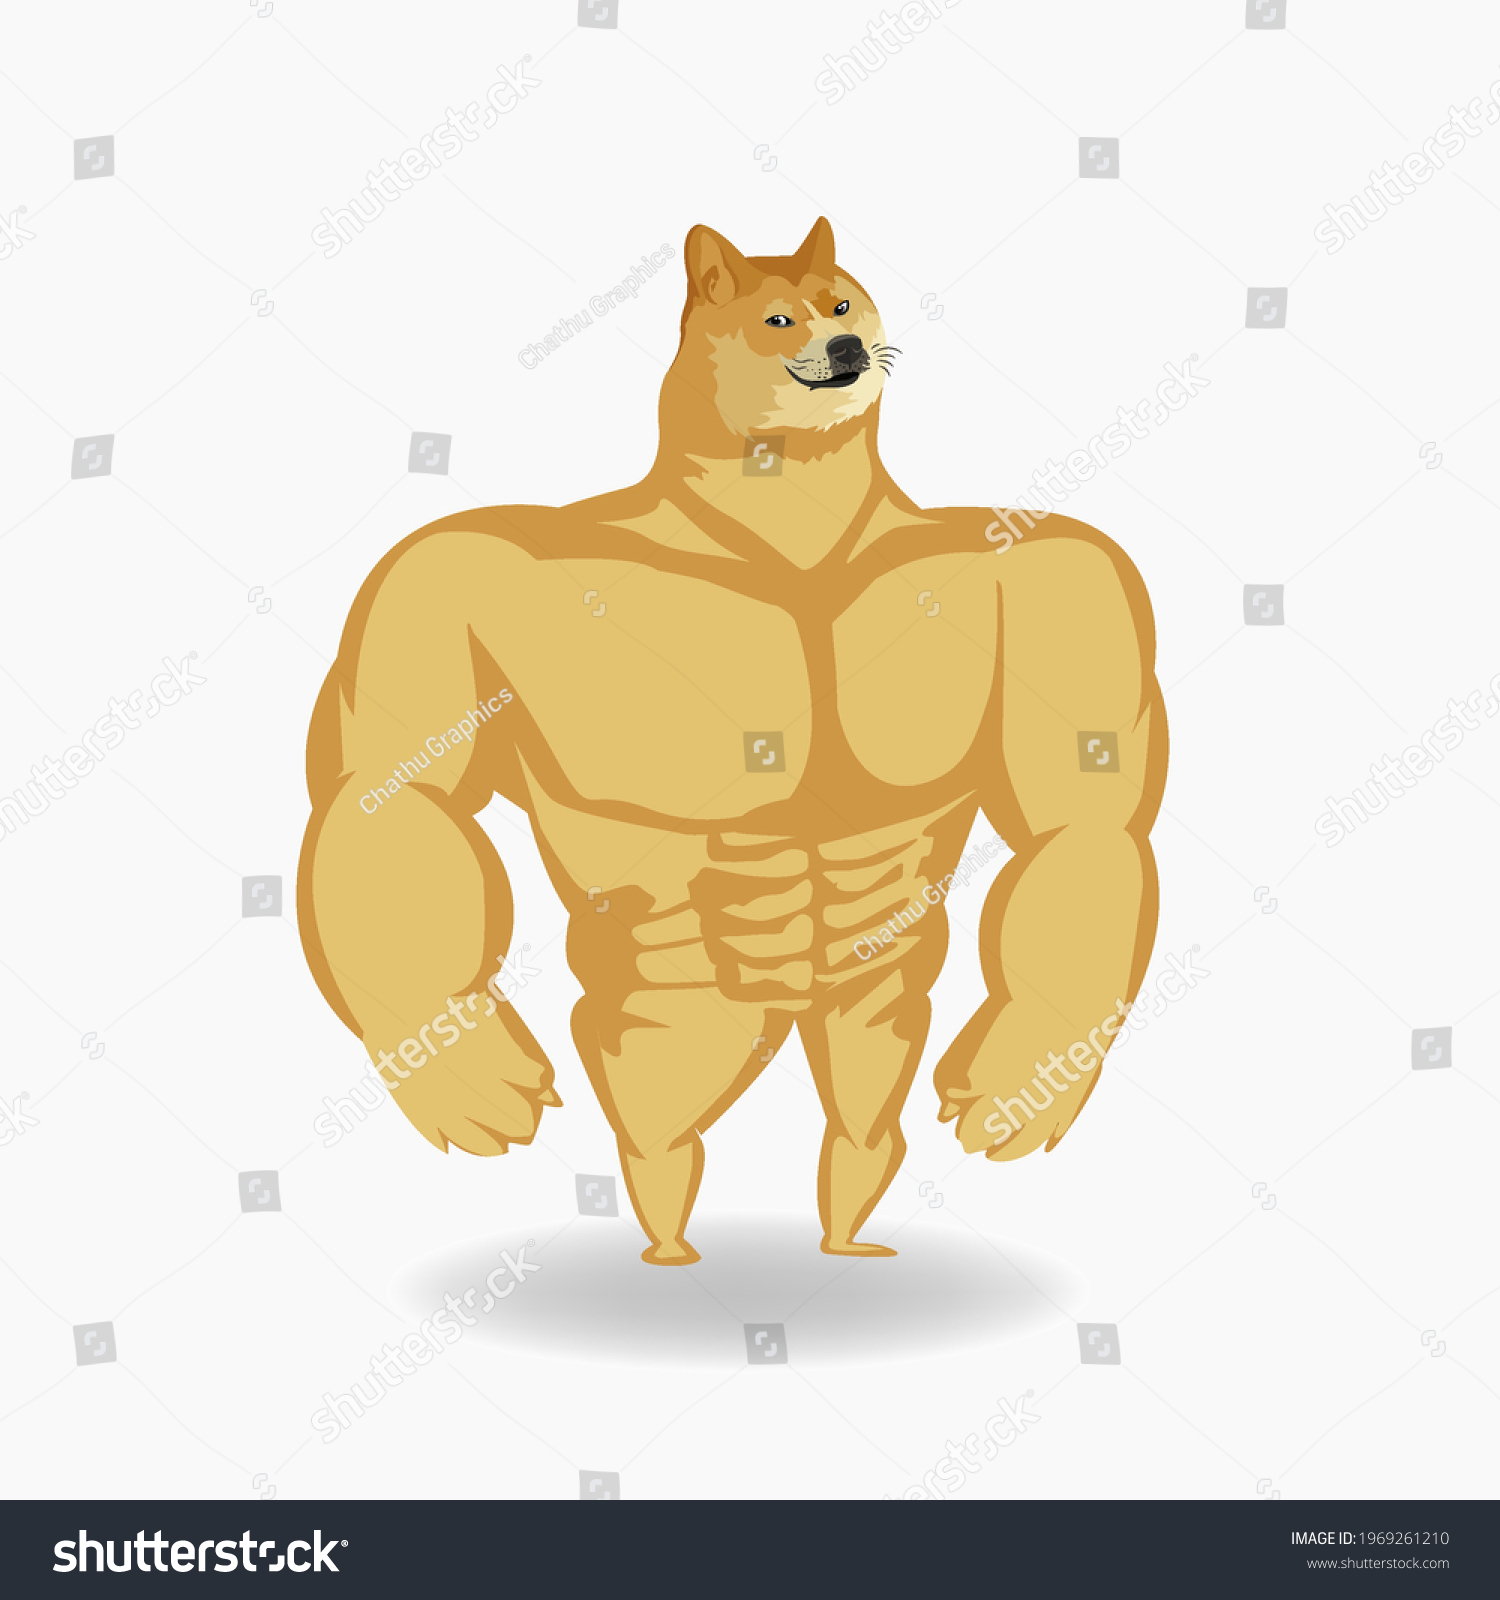 SVG of Shiba Inu meme dog, original vector illustration, Facebook meme dog cartoon svg